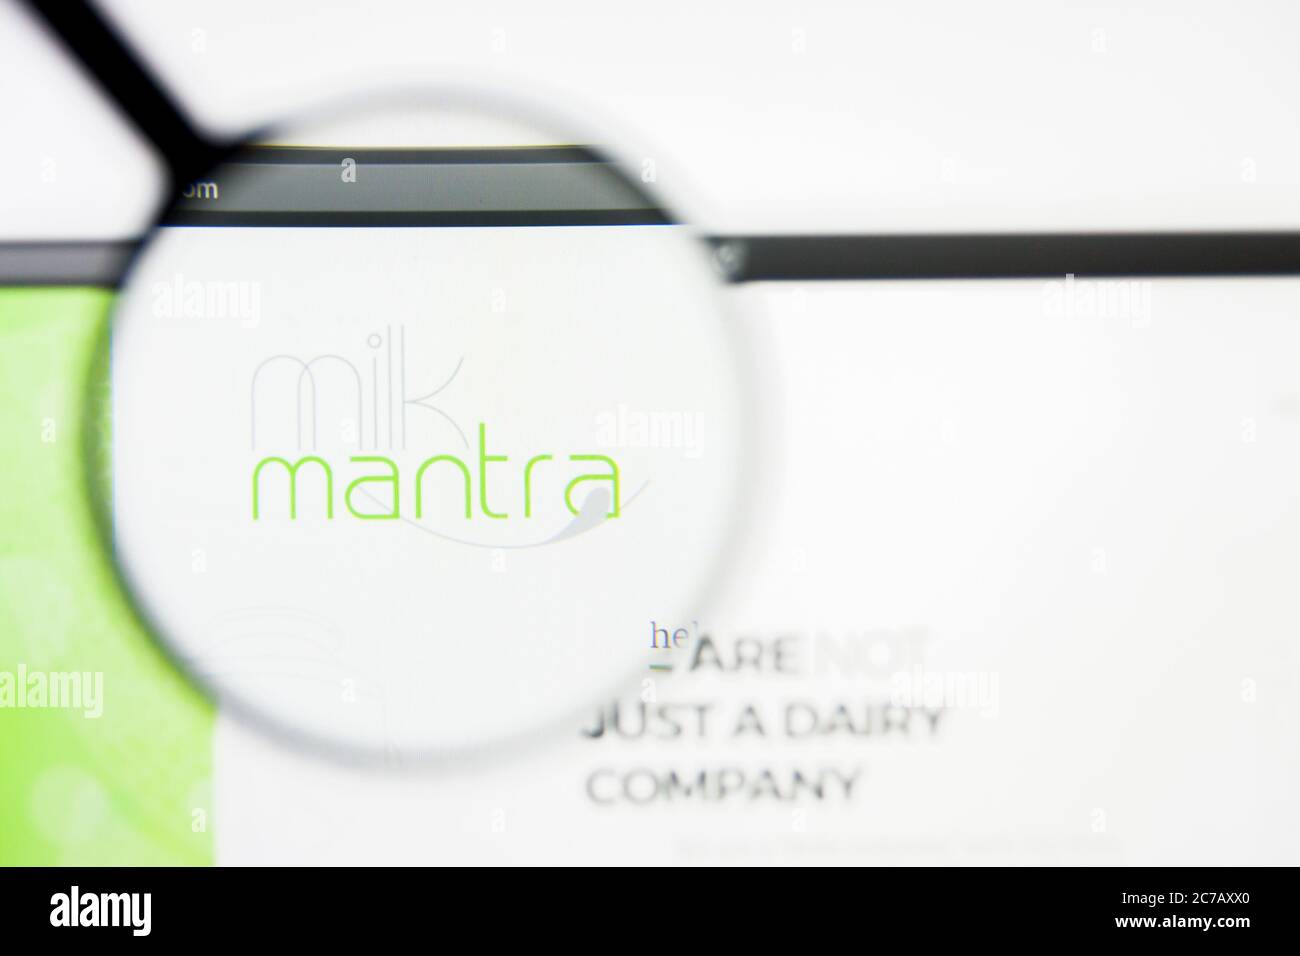 San Francisco, California, USA - 8 April 2019: Illustrative Editorial of Milk Mantra Dairy website homepage. Milk Mantra Dairy logo visible on display Stock Photo